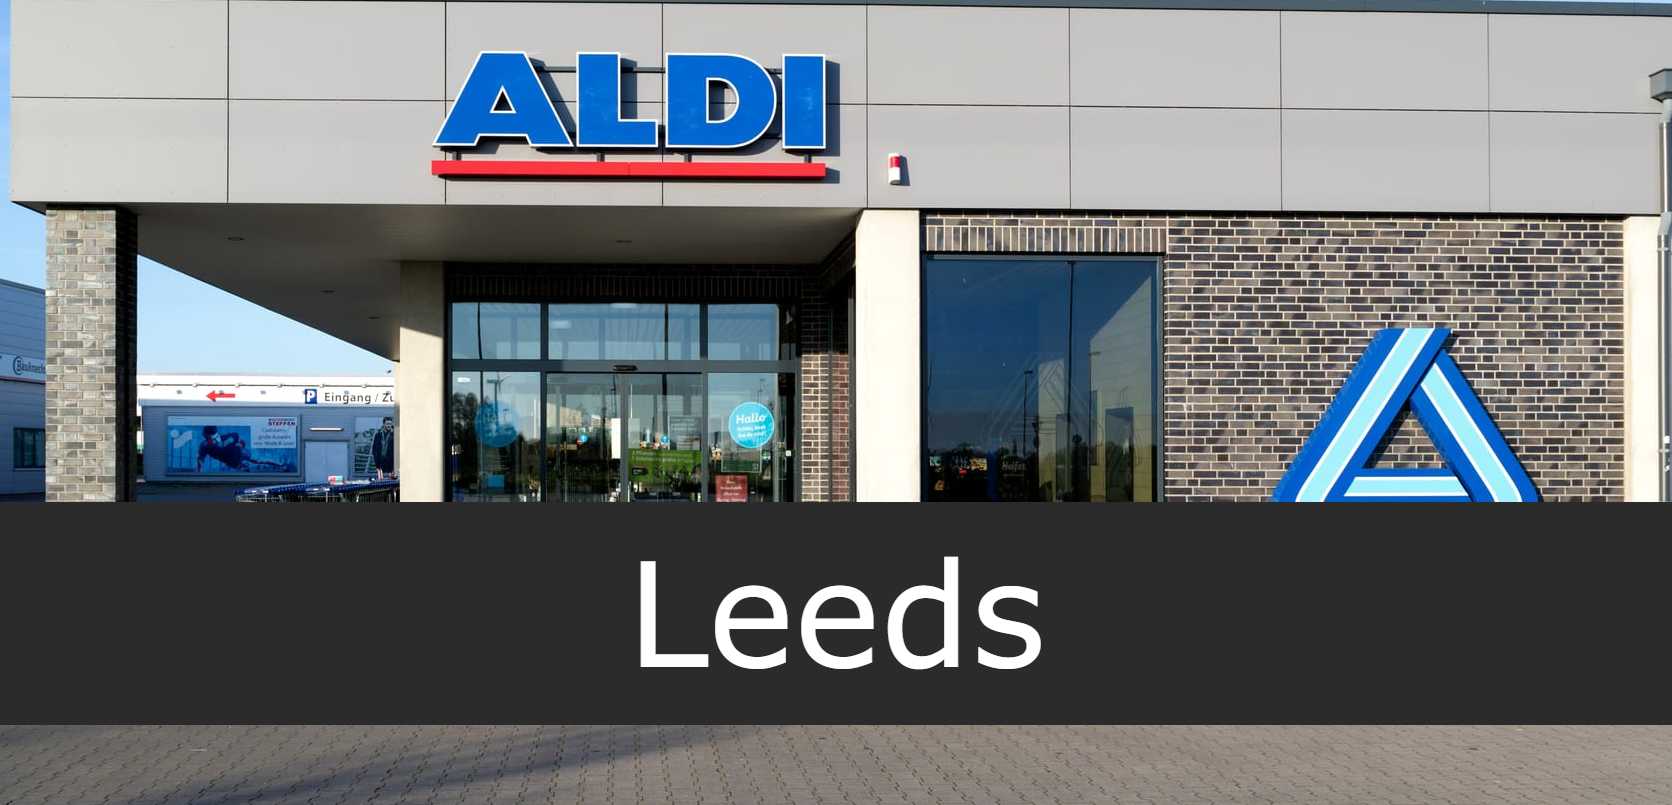 Aldi Leeds